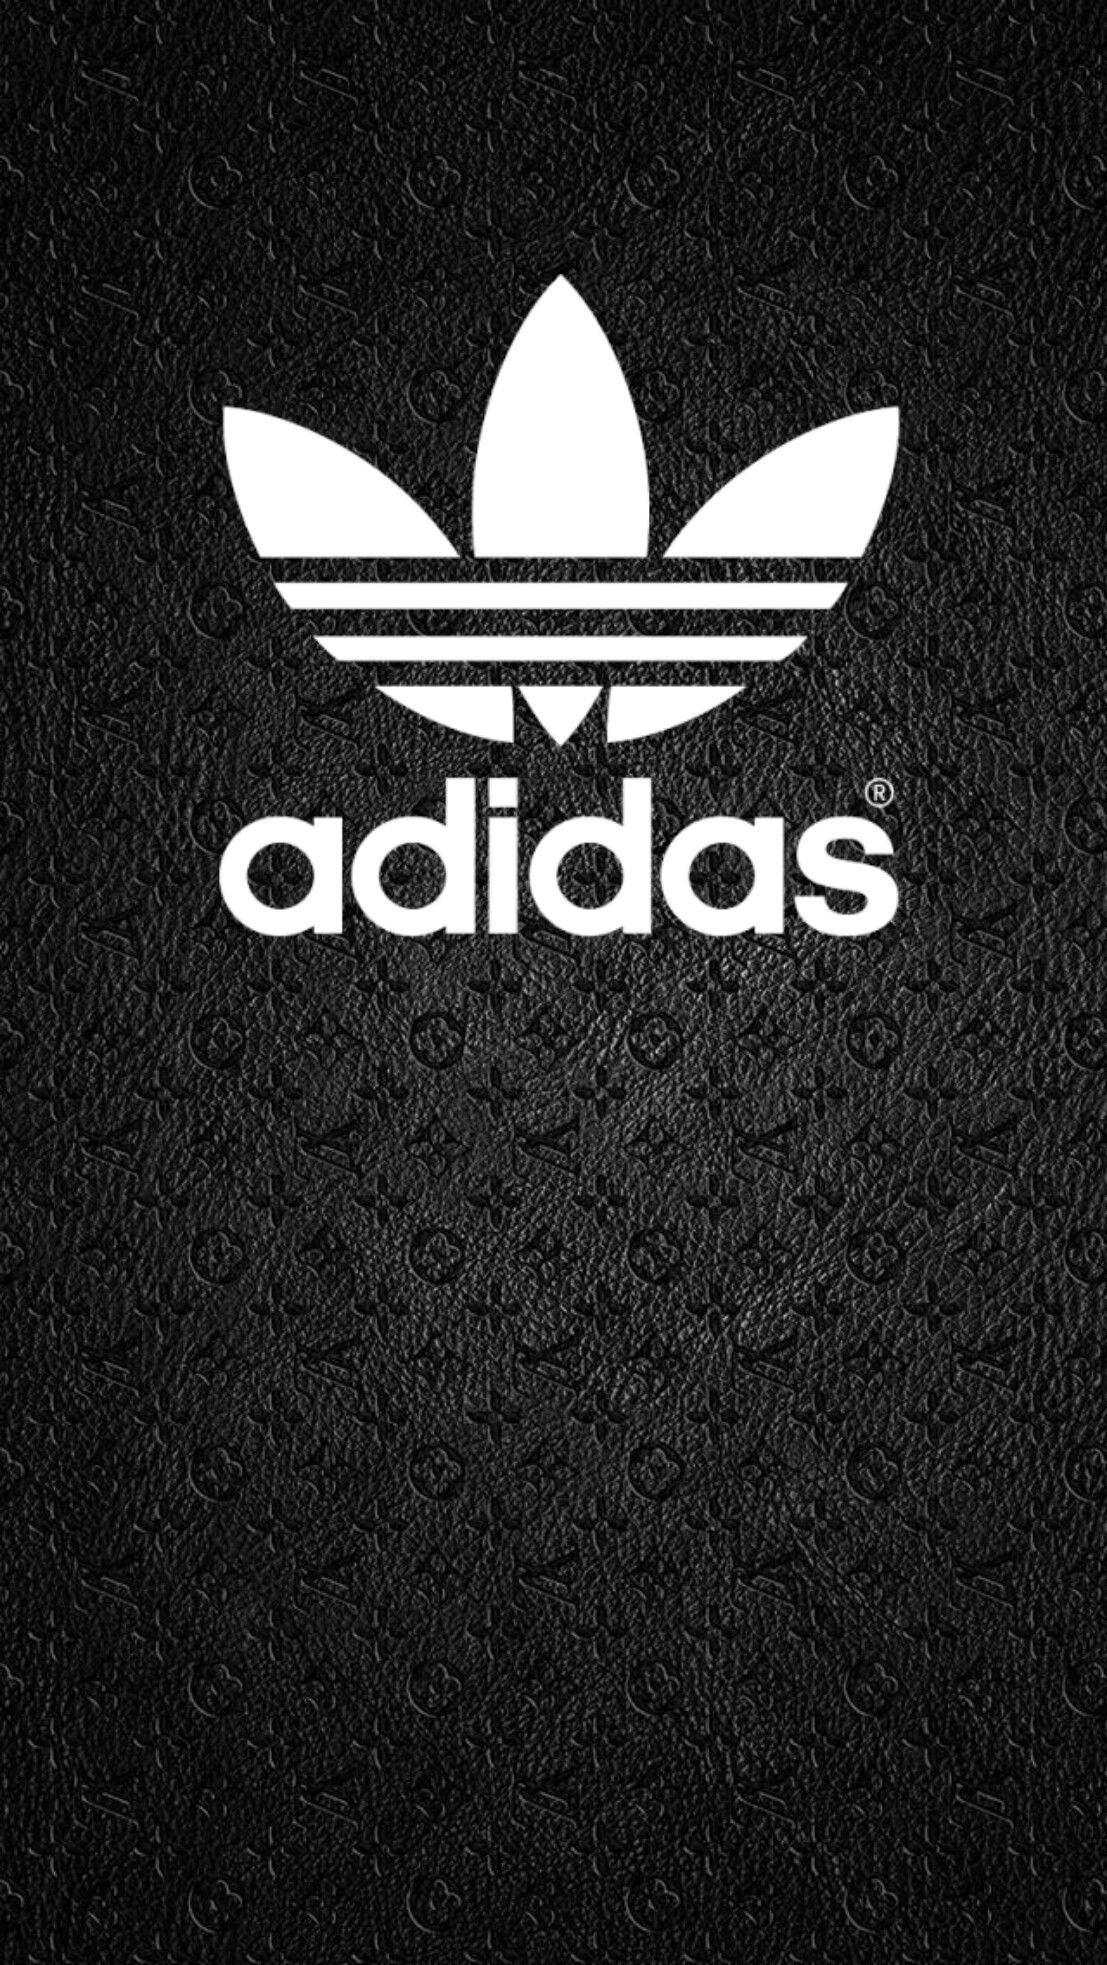 White Addidas Logo - Adidas Logo White On Black BG - Wallpaper/Background/Screensaver ...